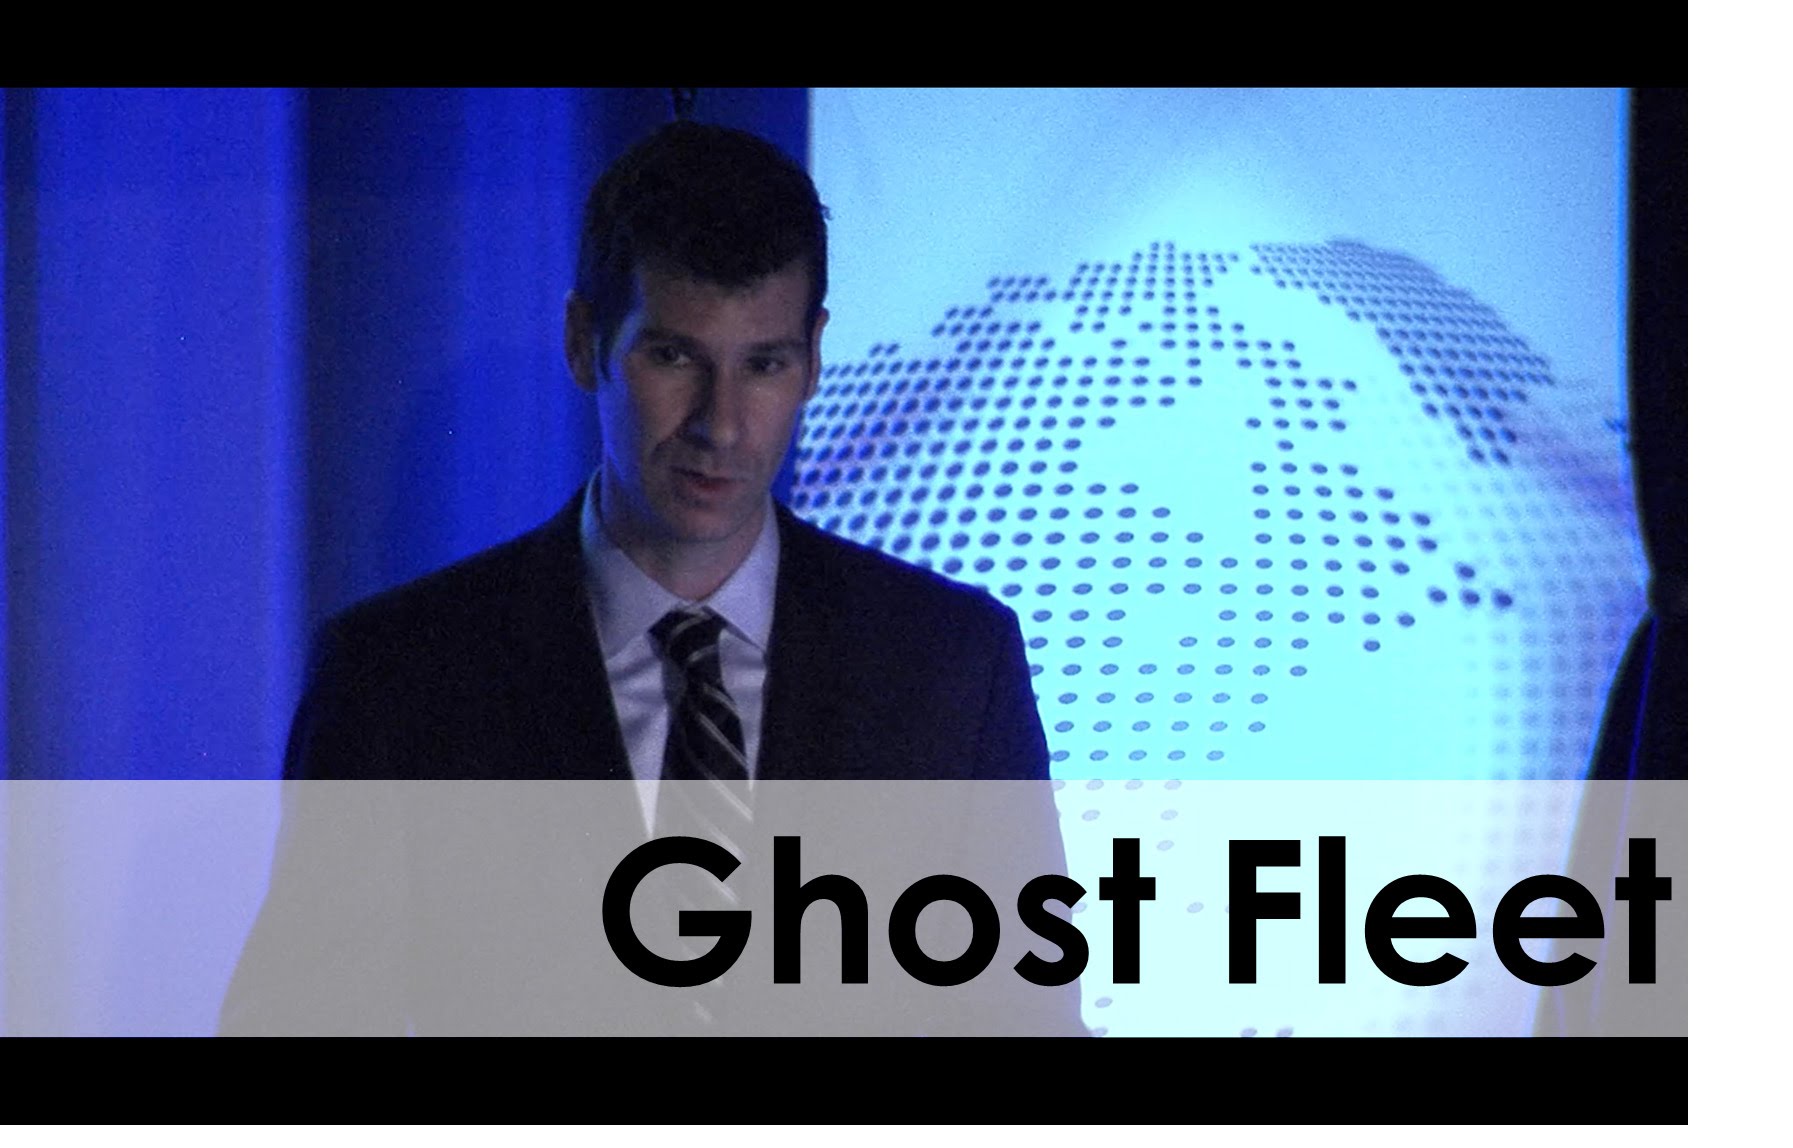 Naif Kalau Adanya Keharusan Kajian dan Analisis "Ghost Fleet"